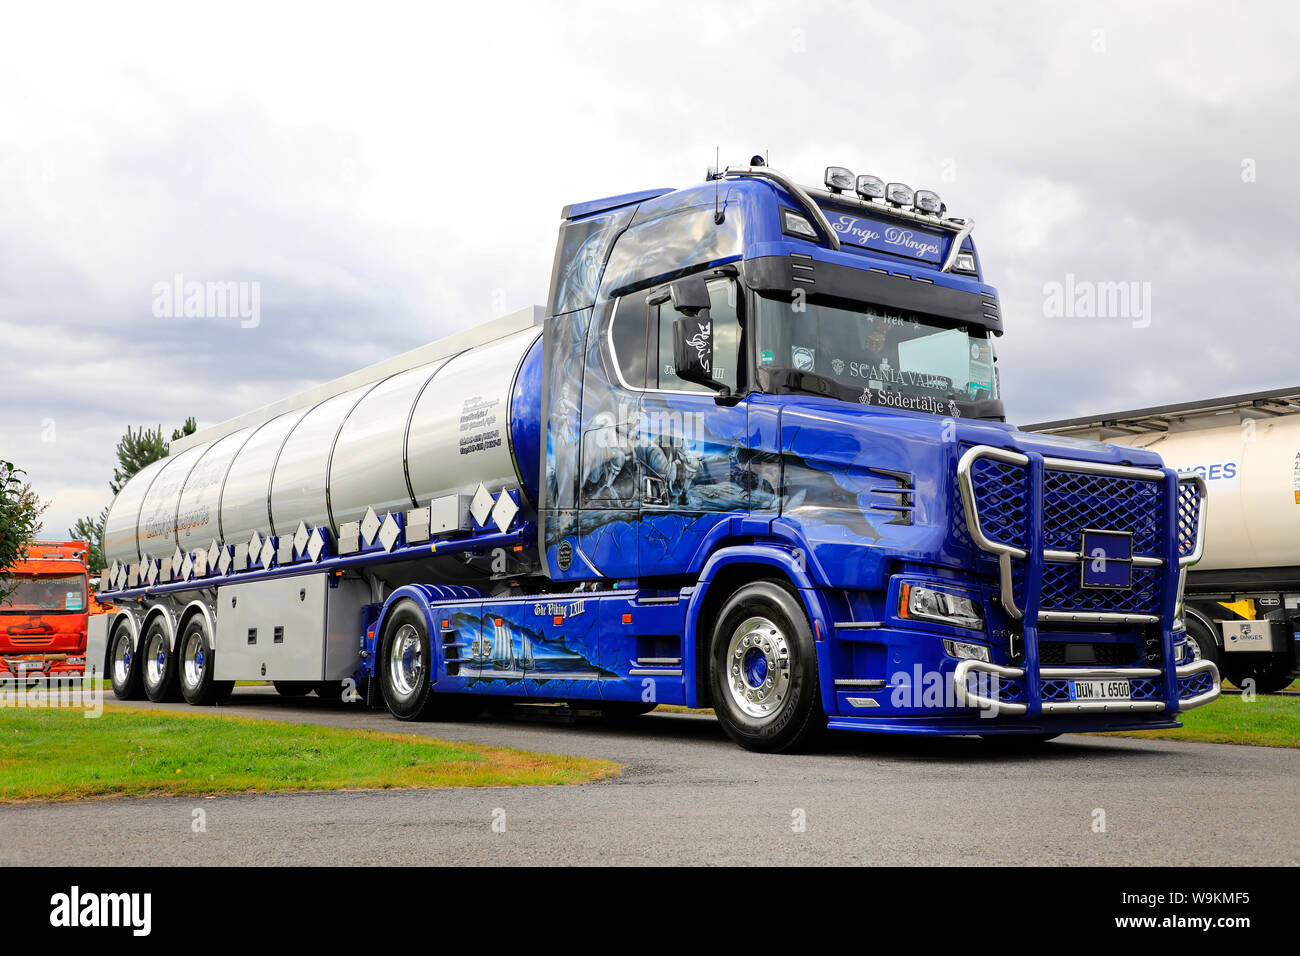 Scania Deutschland feiert den V8 beim ADAC Truck-Grand-Prix 2019